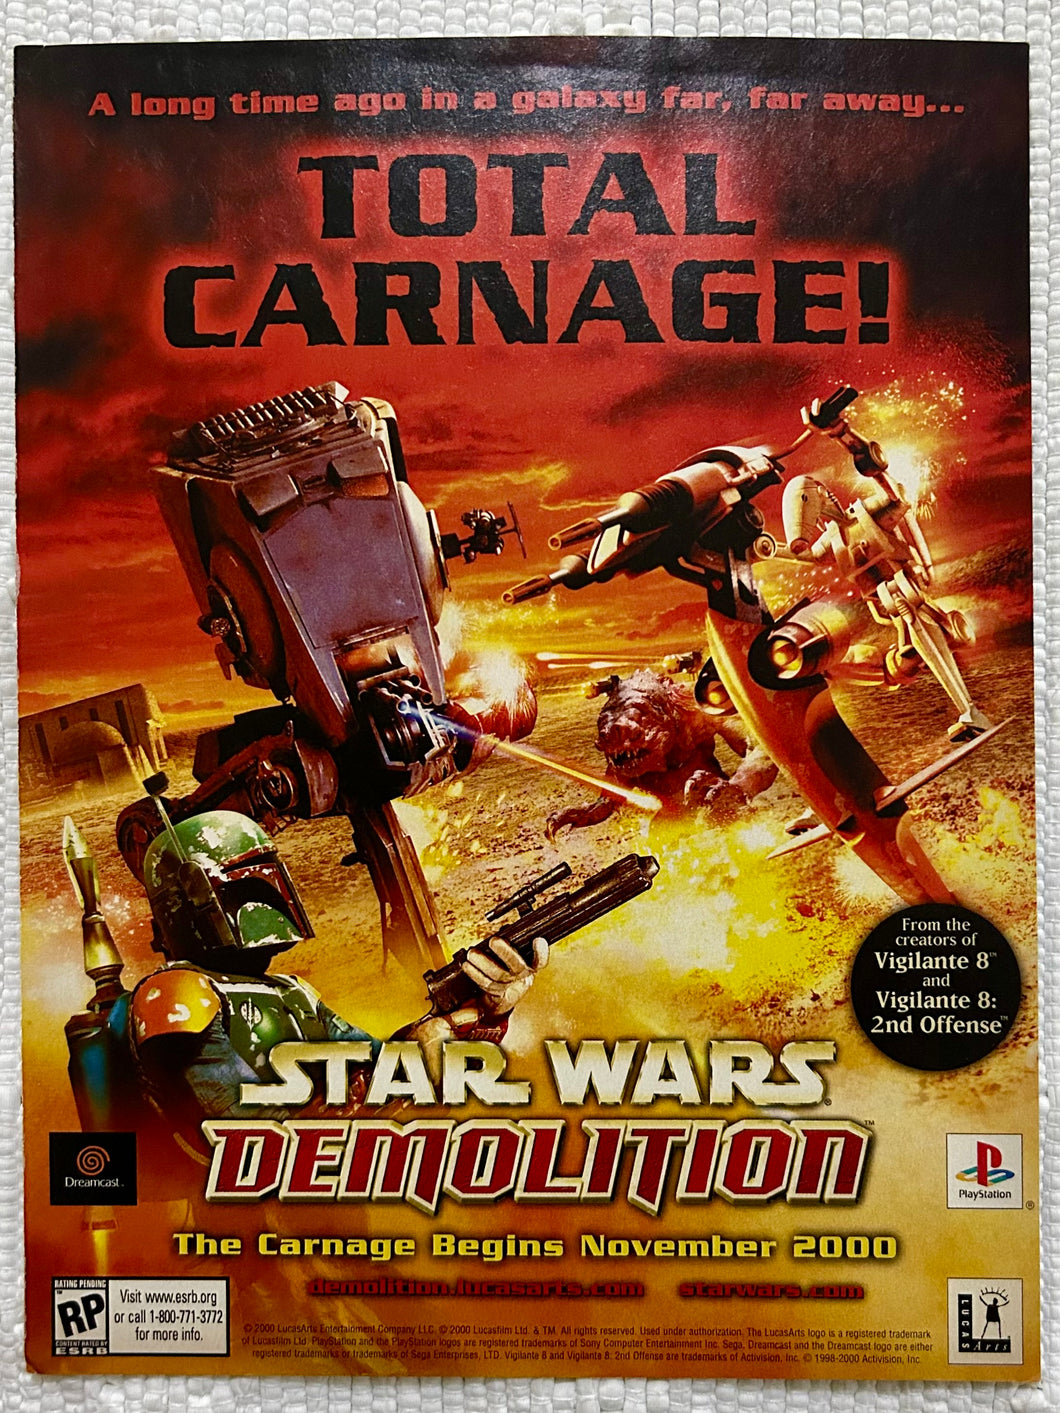 Star Wars Demolition - PlayStation Dreamcast - Original Vintage Advertisement - Print Ads - Laminated A4 Poster